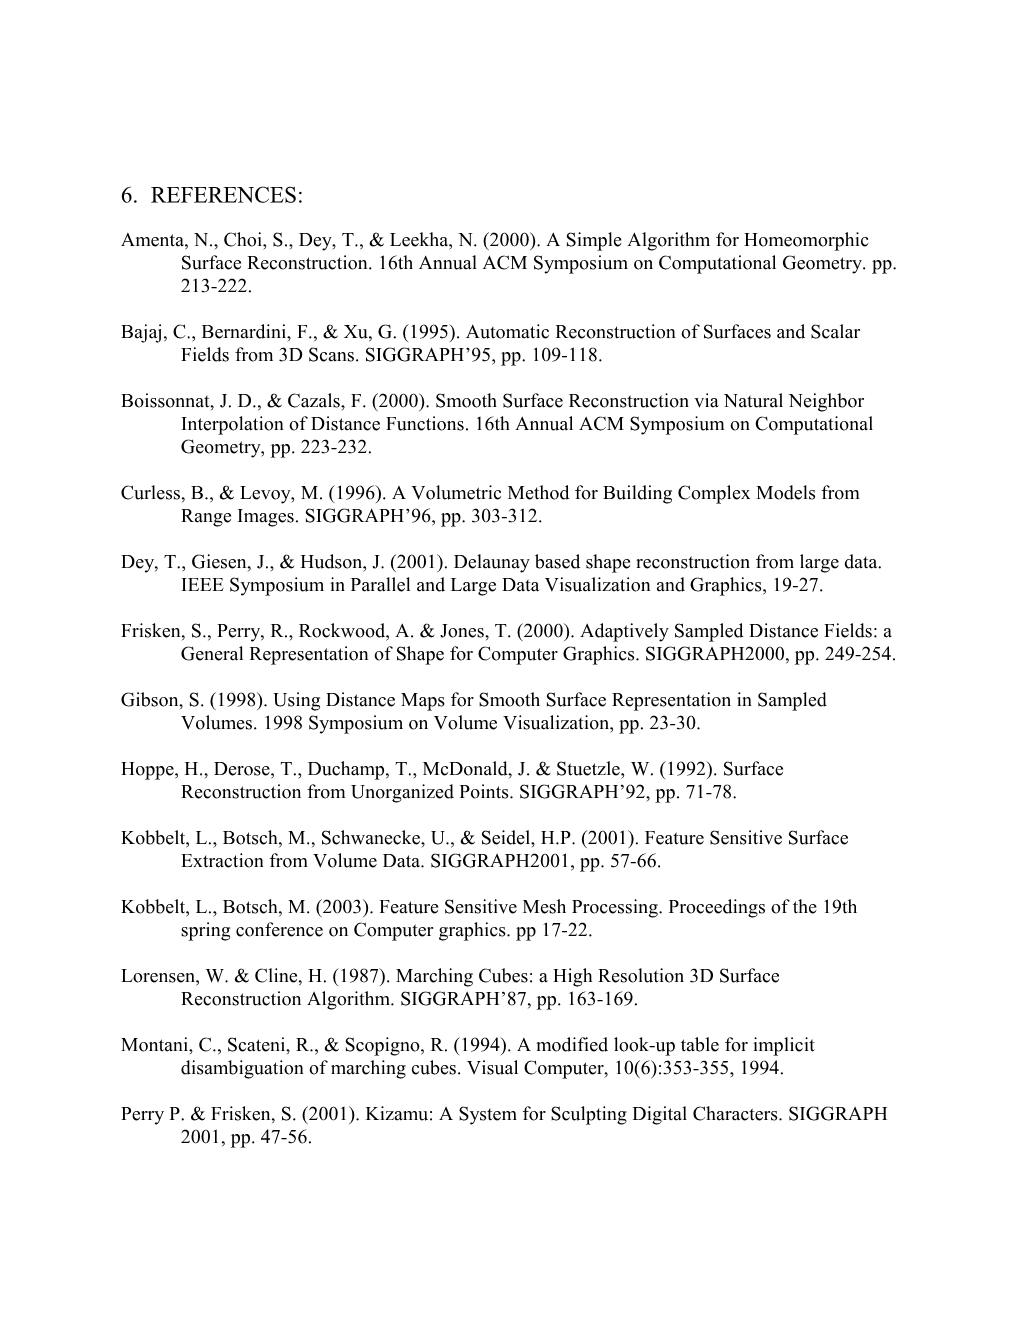 Bajaj,C., Bernardini, F., Xu, G. (1995). Automatic Reconstruction of Surfaces and Scalar